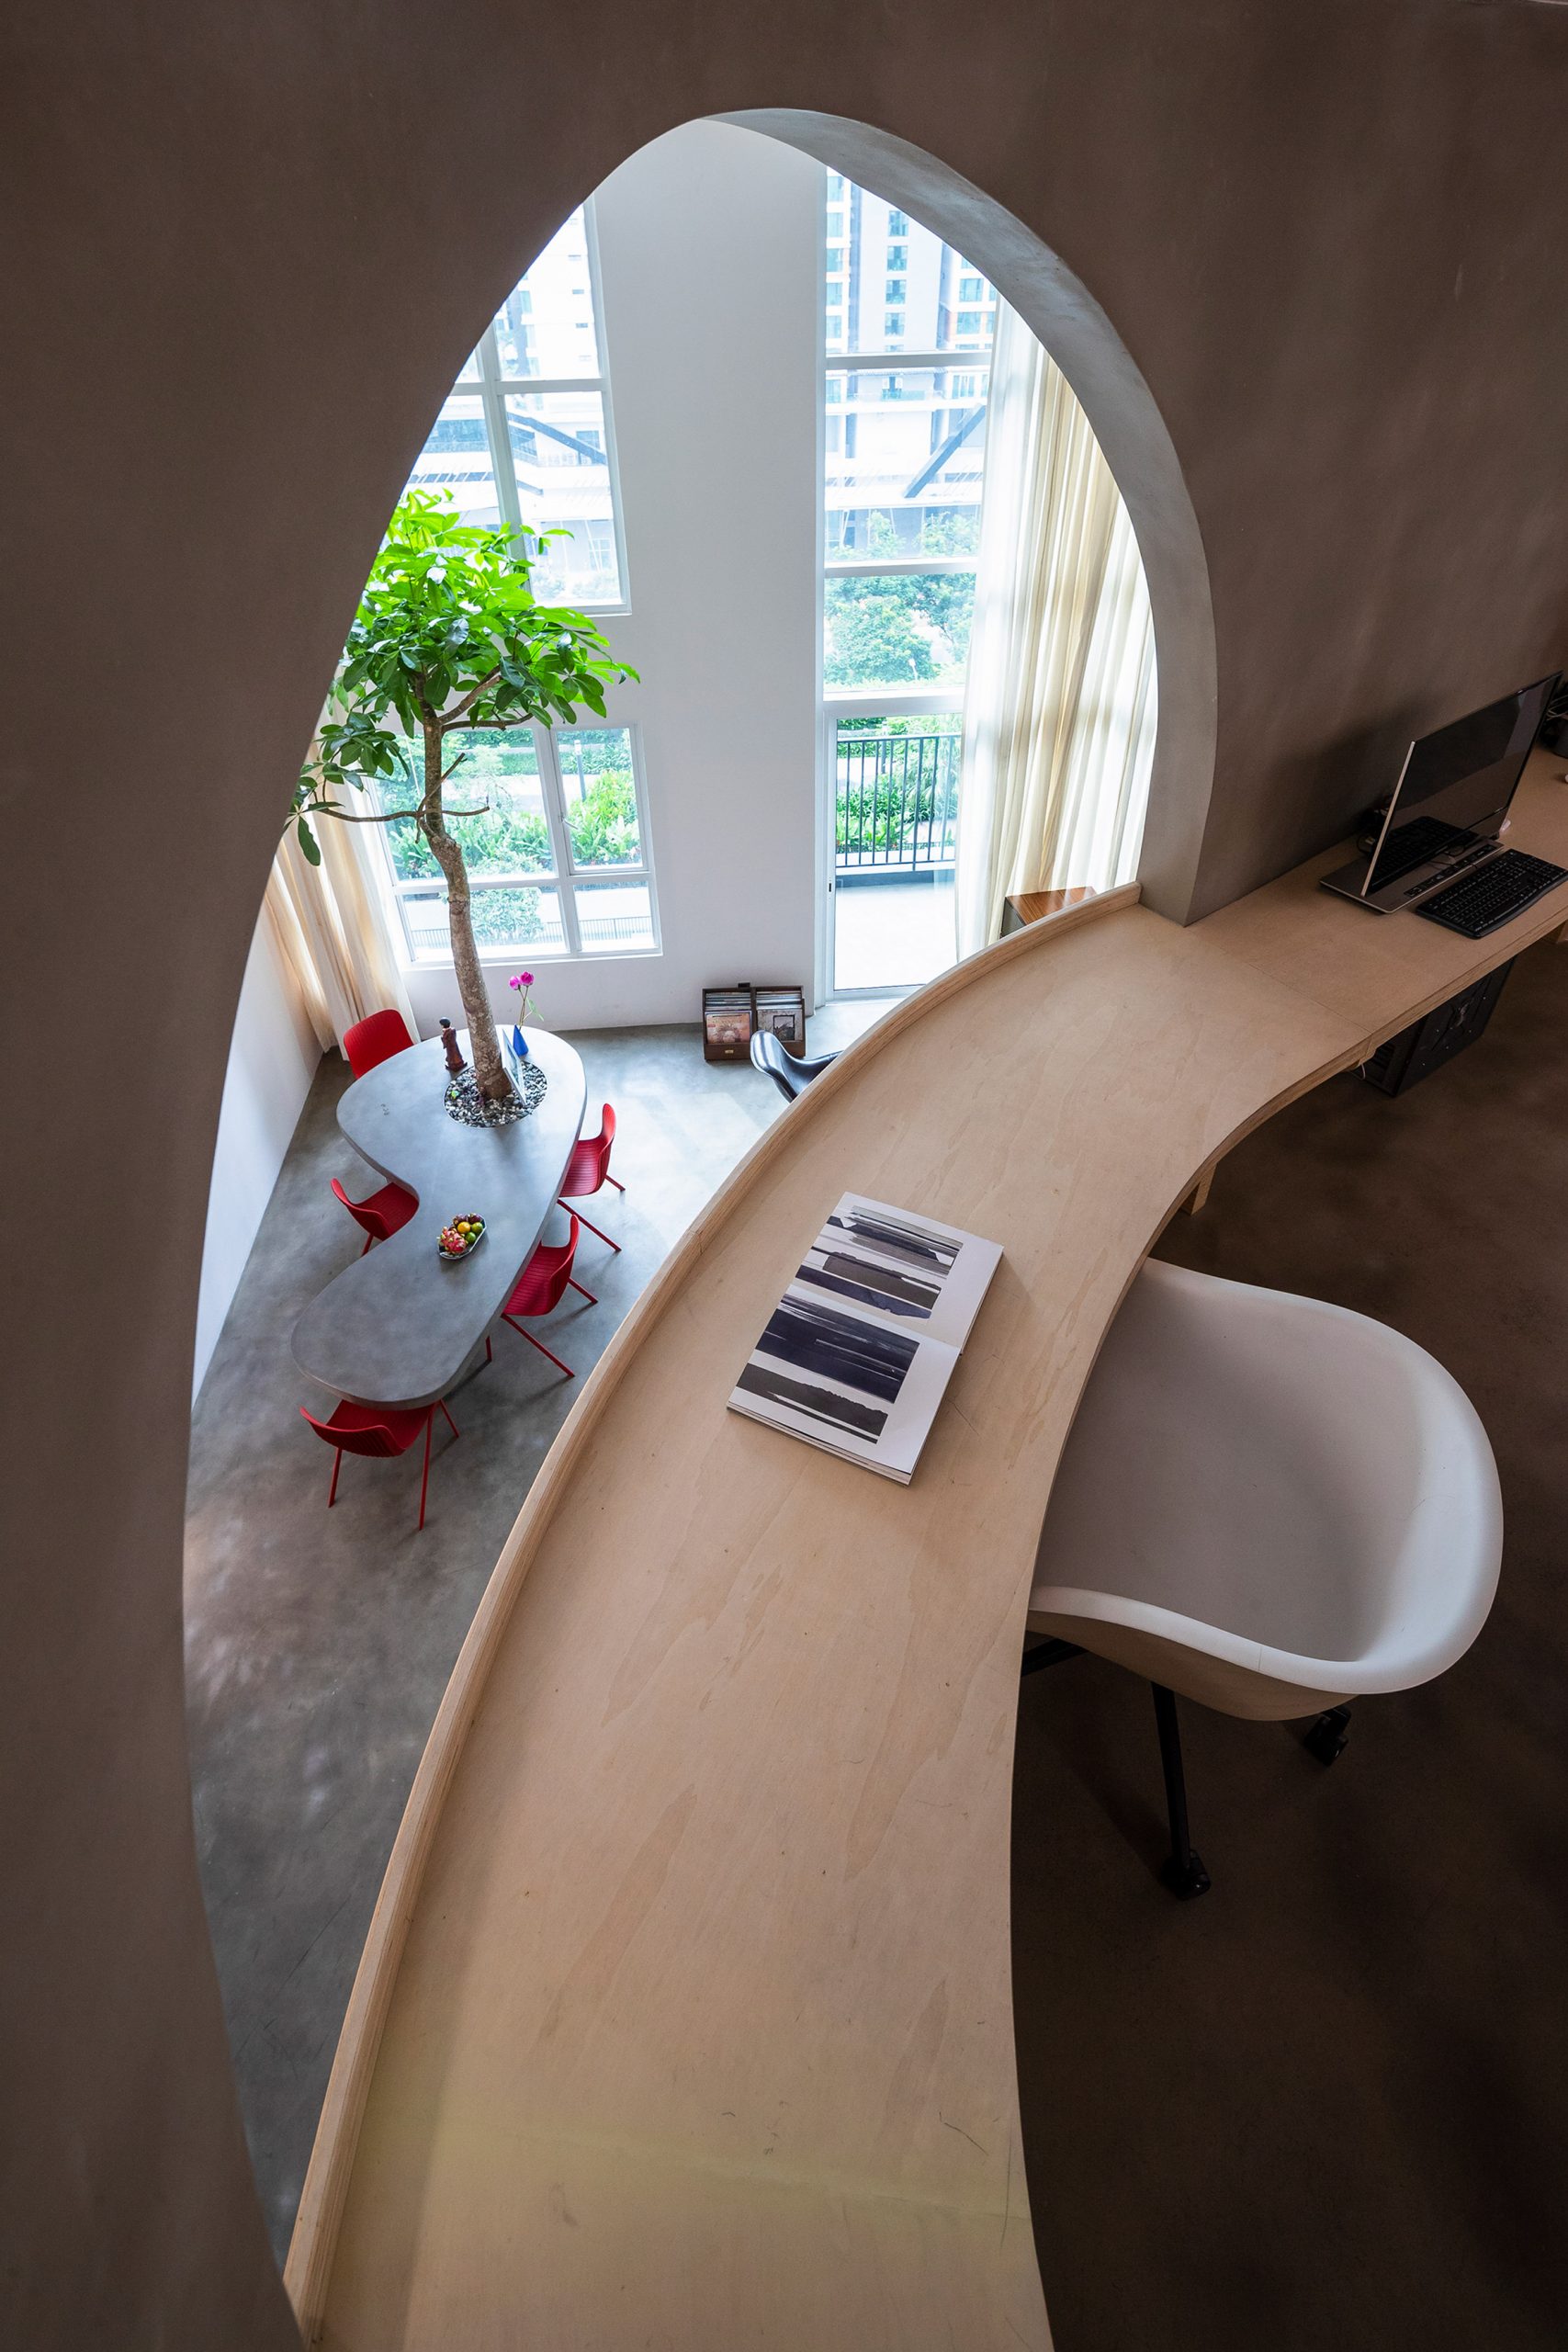 Mài Apartment in Vietnam designed by Whale Design Lab